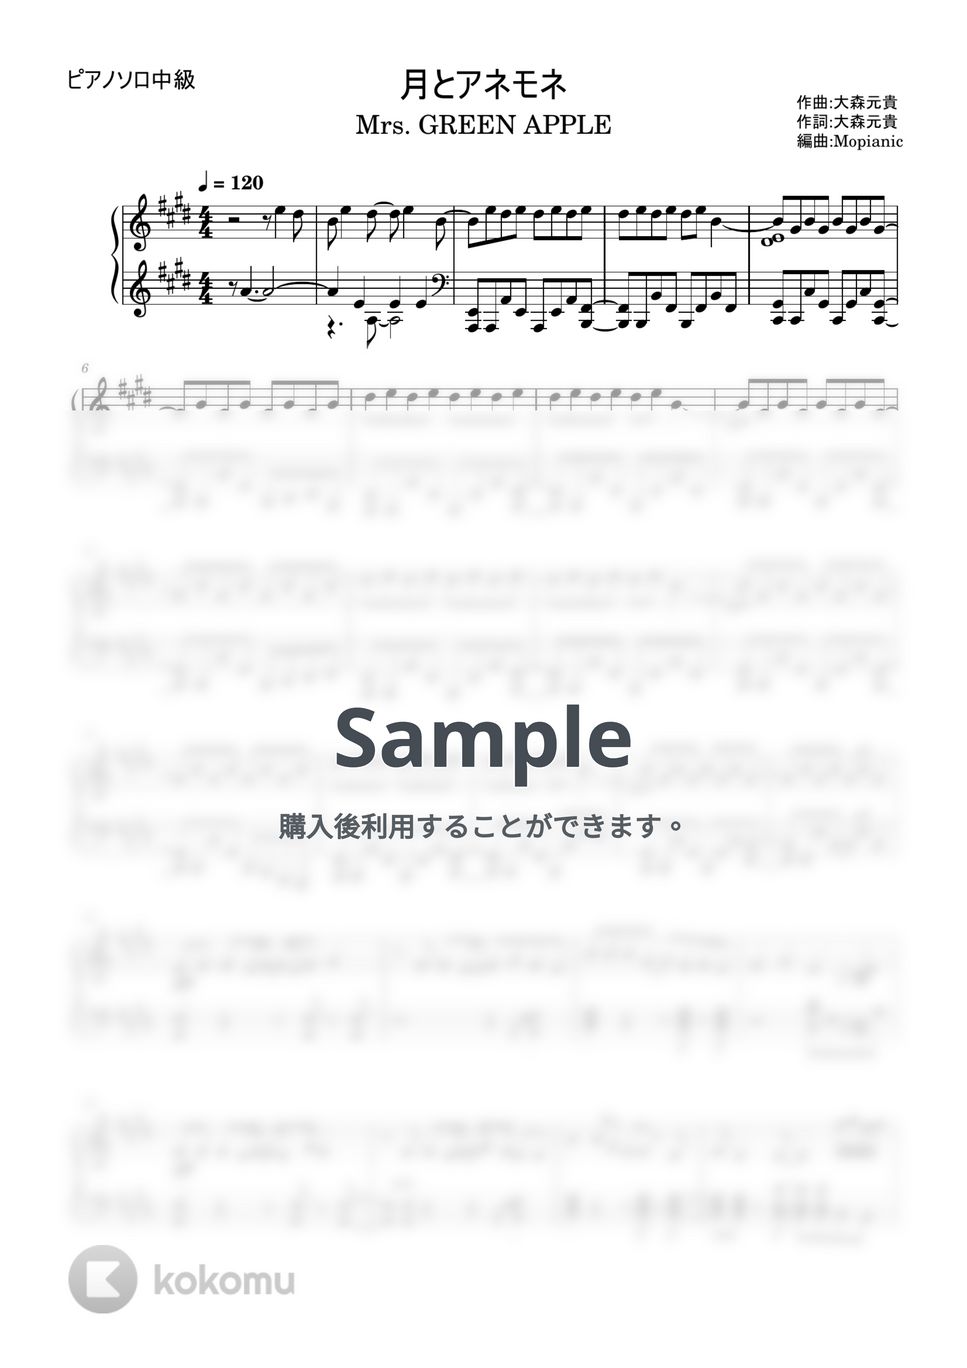 Mrs. GREEN APPLE - Tsuki to Anemone (intermediate, piano) by Mopianic